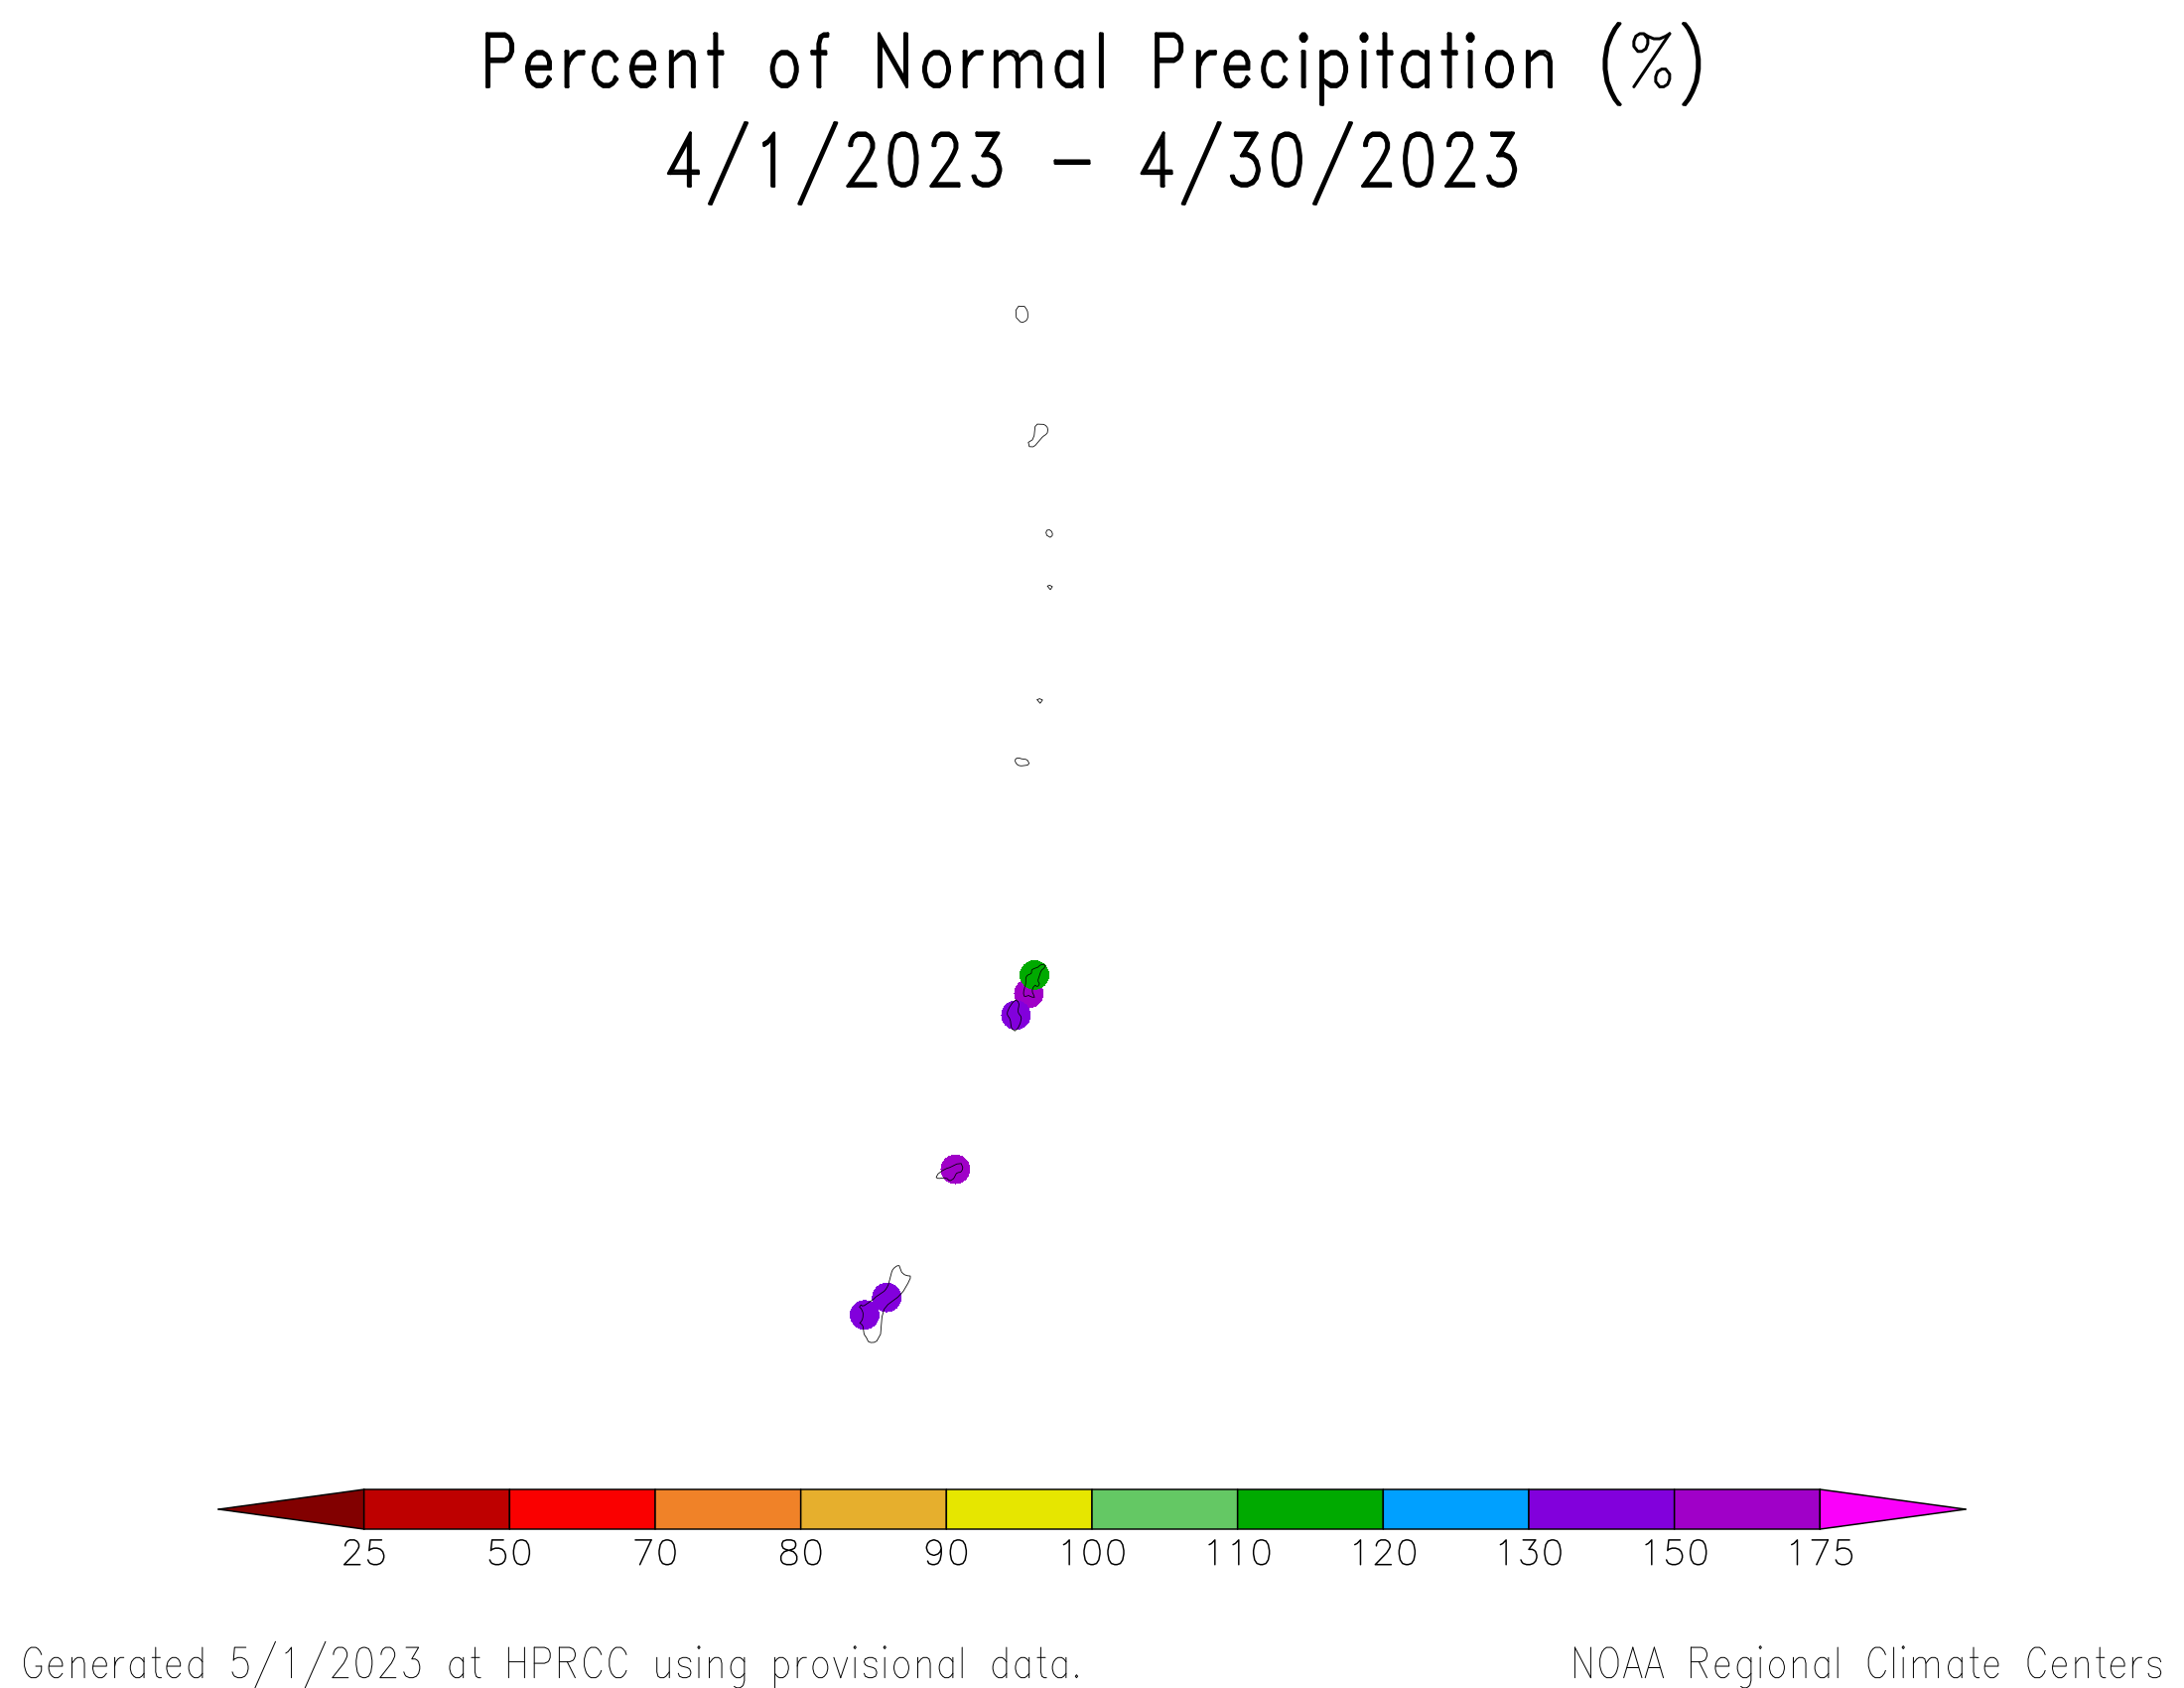 April 2023 Percent of Normal Precipitation for the Marianas